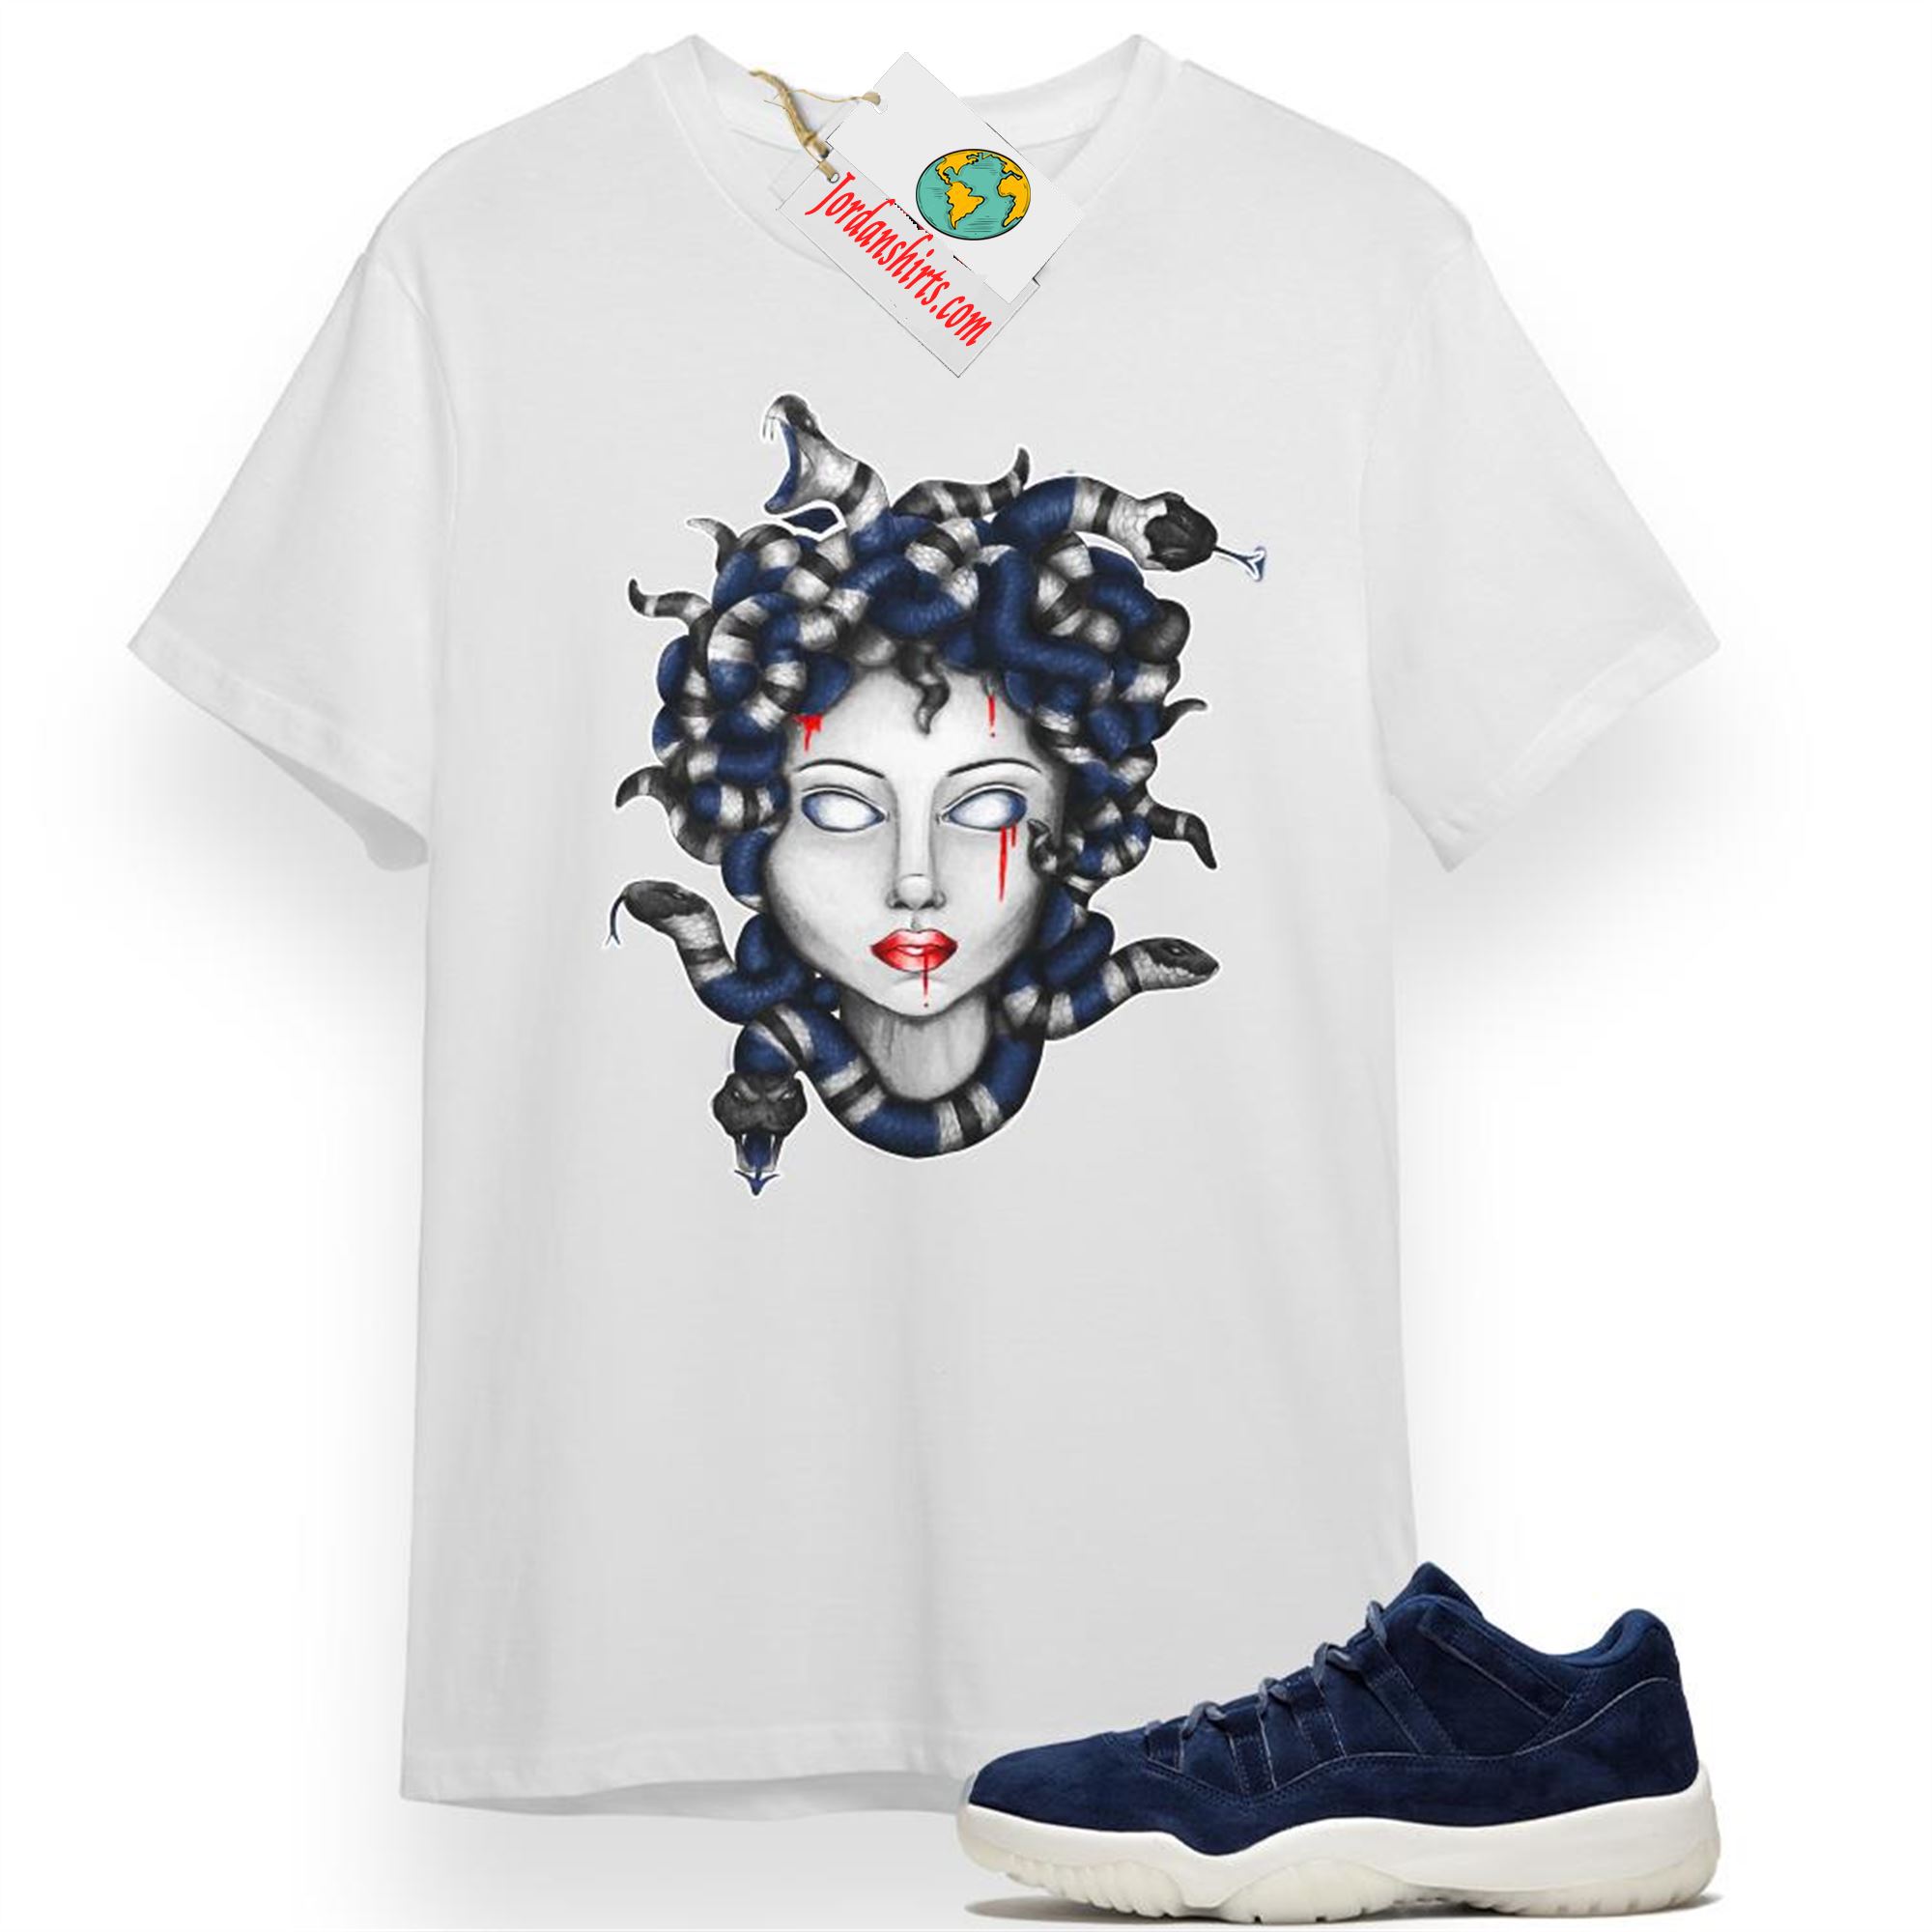 Jordan 11 Shirt, Medusa Snake White T-shirt Air Jordan 11 Derek Jeter 11s Plus Size Up To 5xl